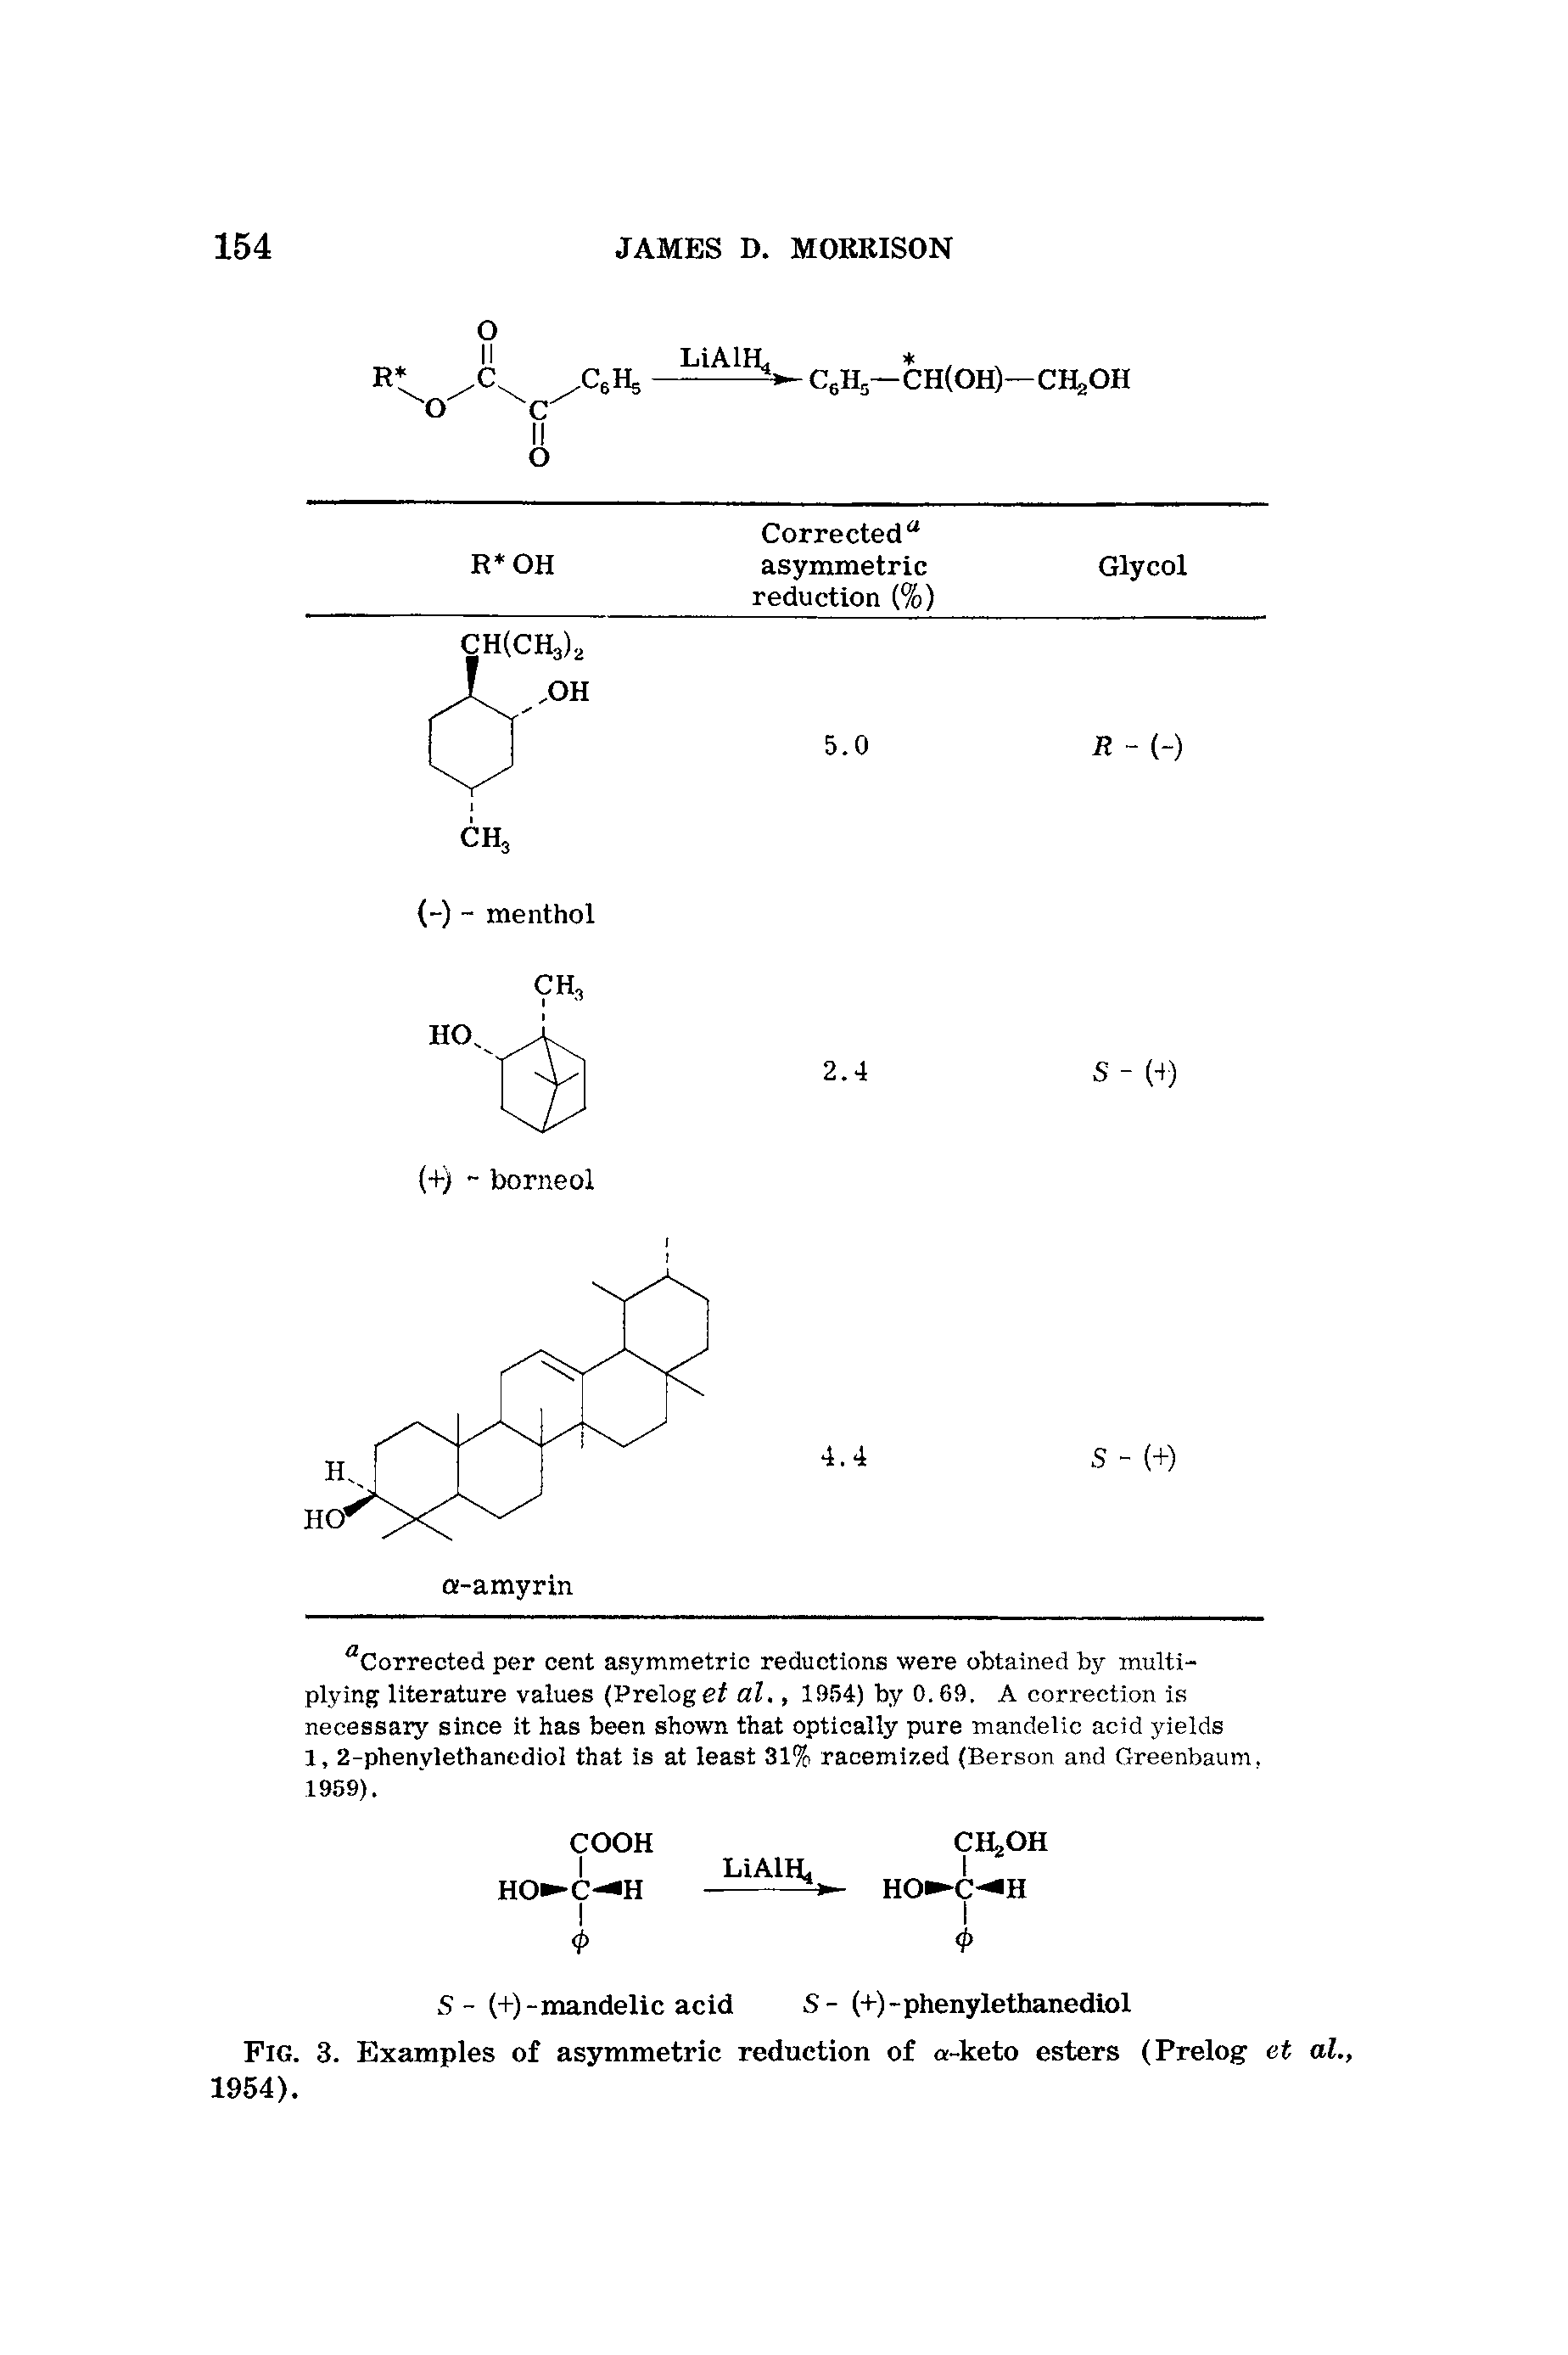 Fig. 3. Examples of asymmetric reduction of a-keto esters (Prelog et al., 1954).